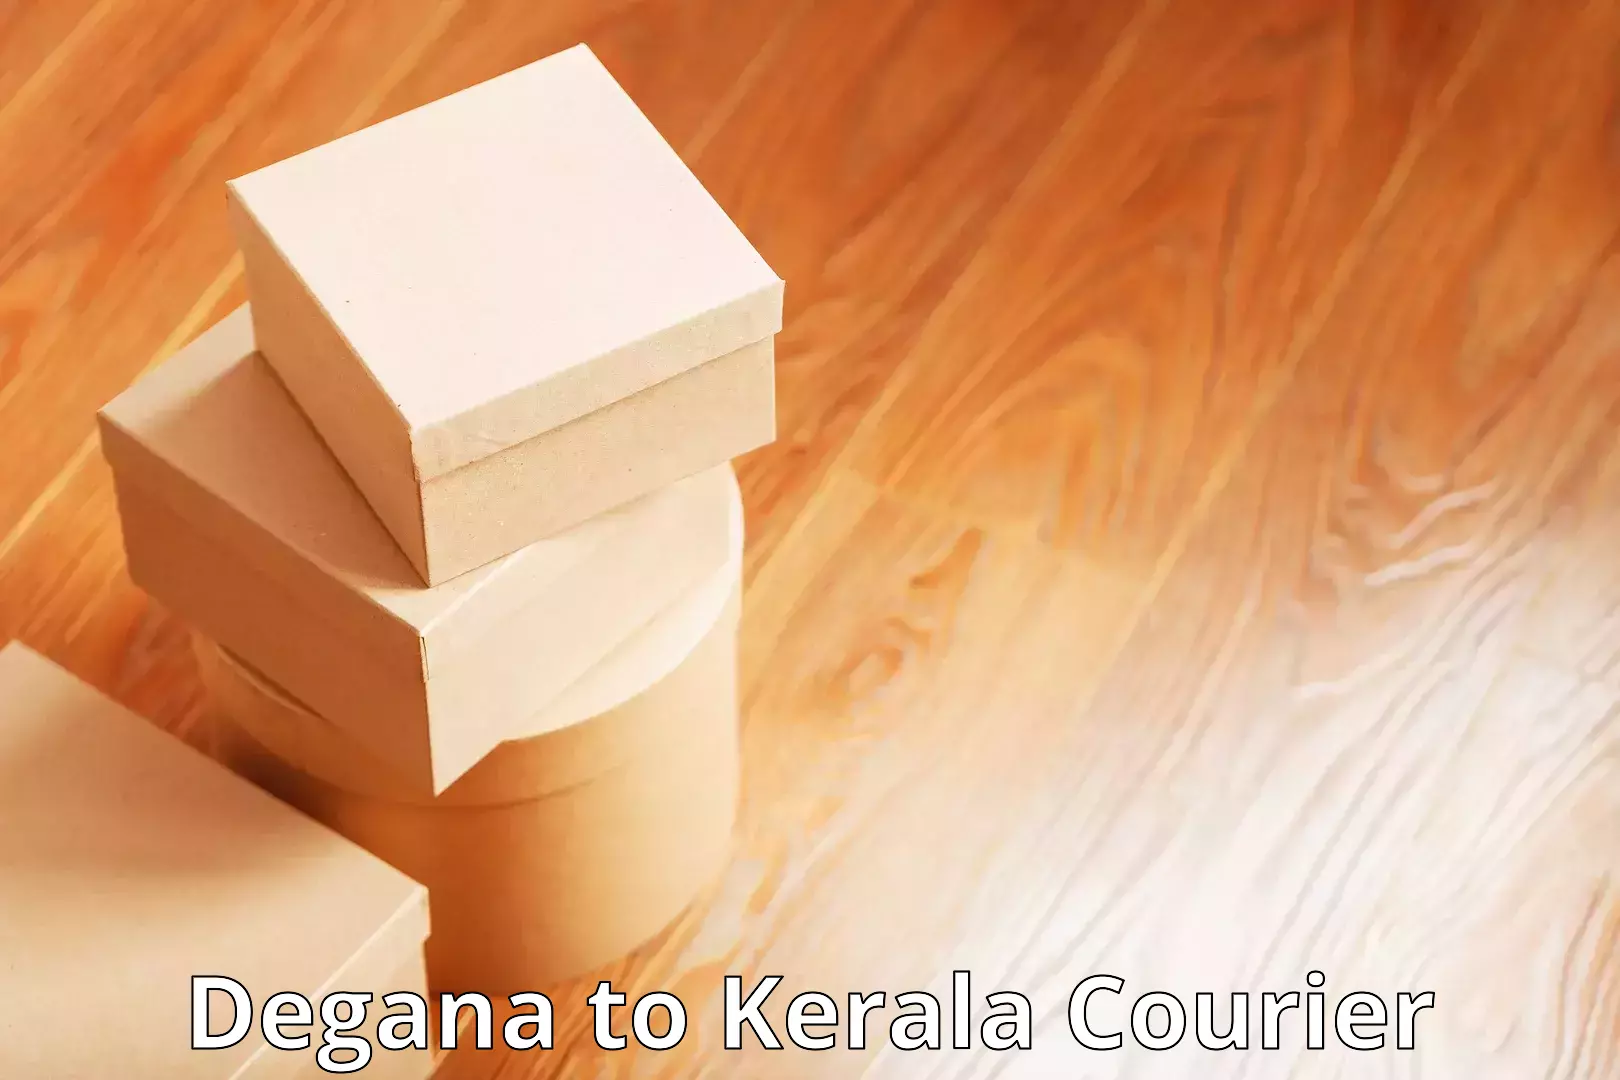 Professional courier handling Degana to Kerala